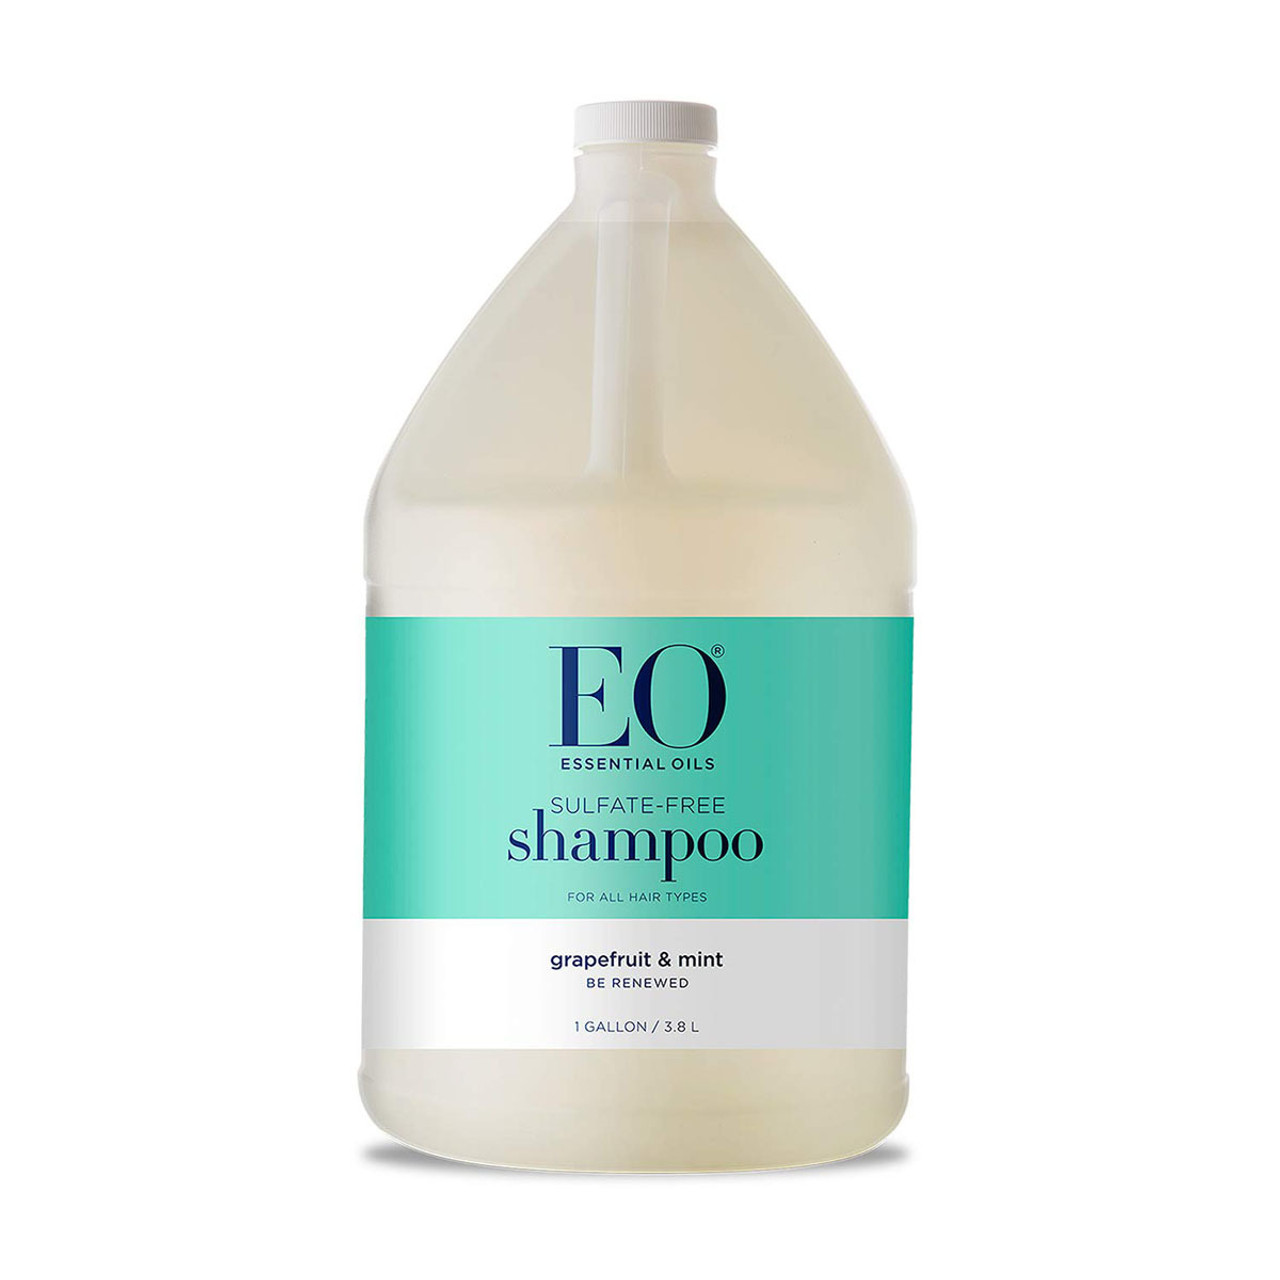 gammelklog Orient Afspejling Grapefruit & Mint Shampoo | Organic Shampoo | EO Products